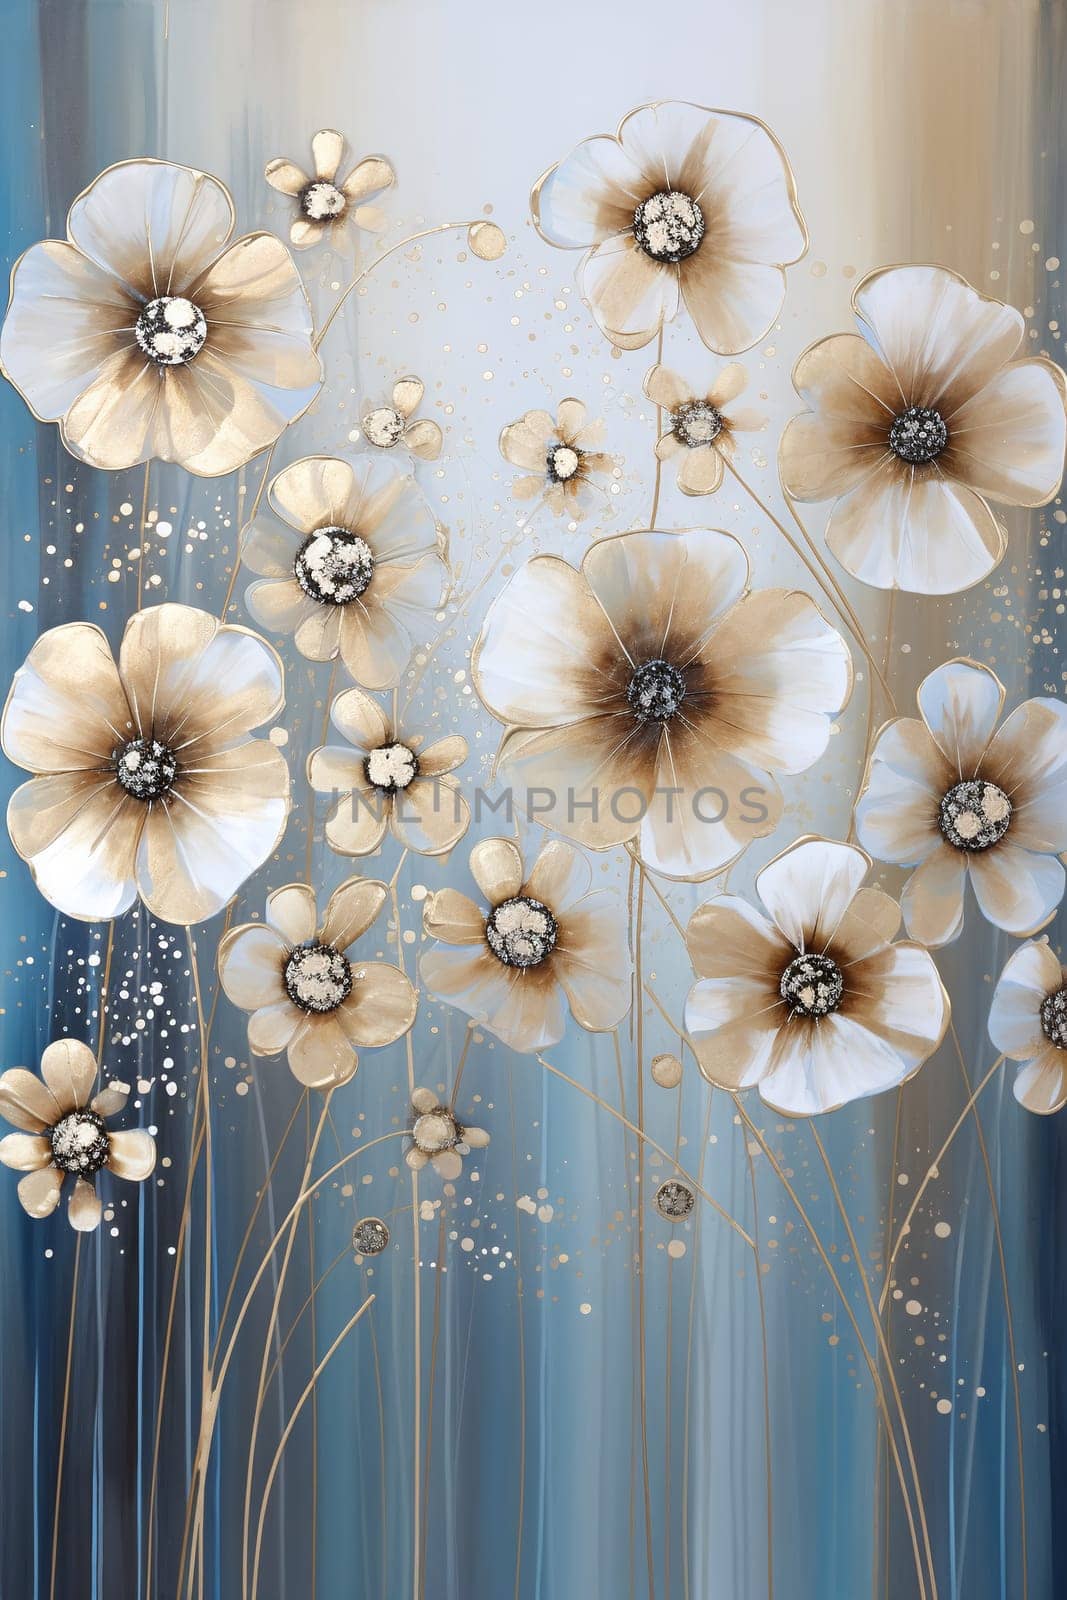 Elegant Floral Artwork on Canvas by chrisroll